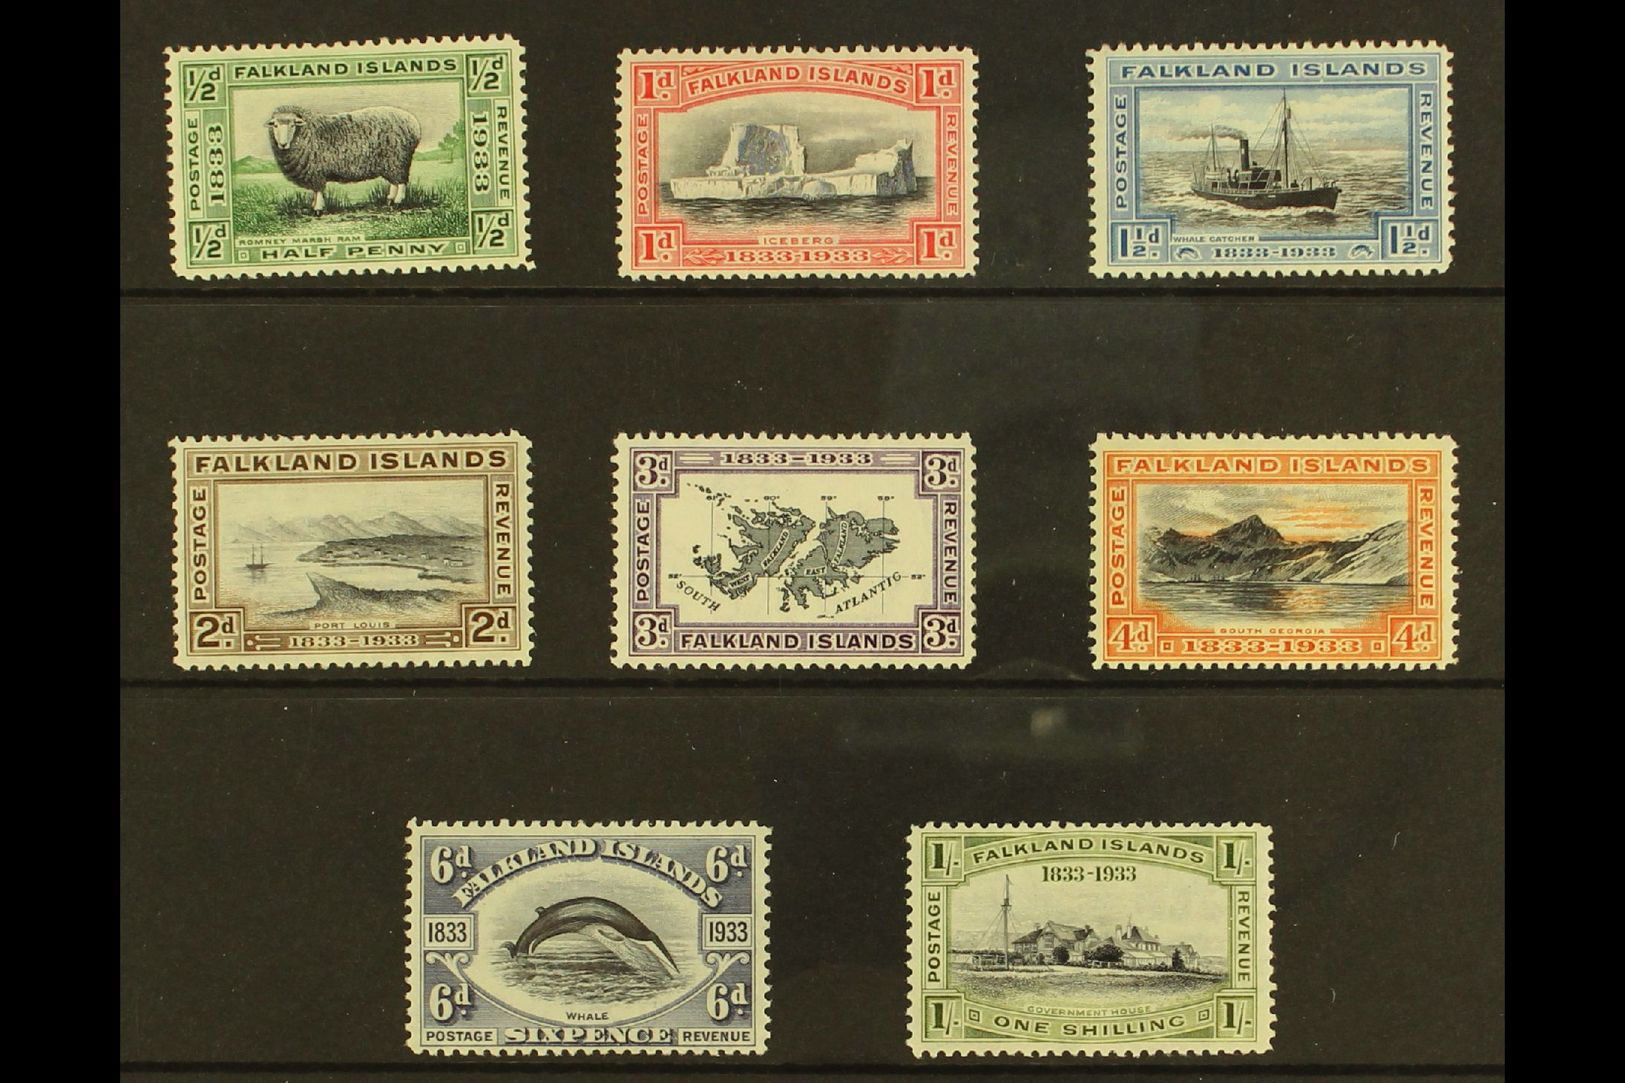 1933 Centenary Set Complete To 1s, SG 127/134, Fine Mint. (8 Stamps) For More Images, Please Visit Http://www.sandafayre - Falklandinseln